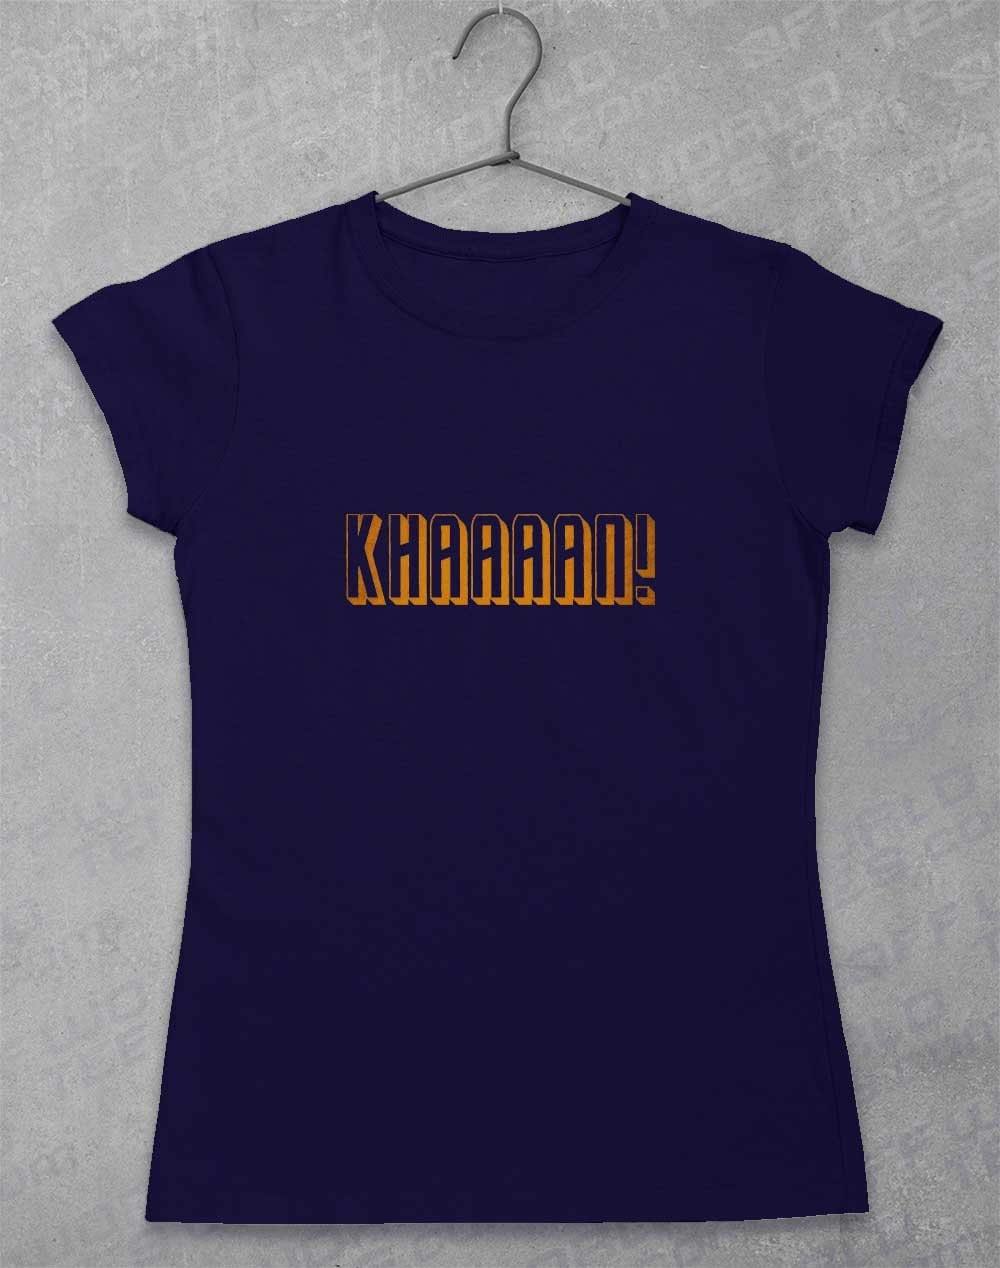 KHAAAAAN Womens T-Shirt 8-10 / Navy  - Off World Tees